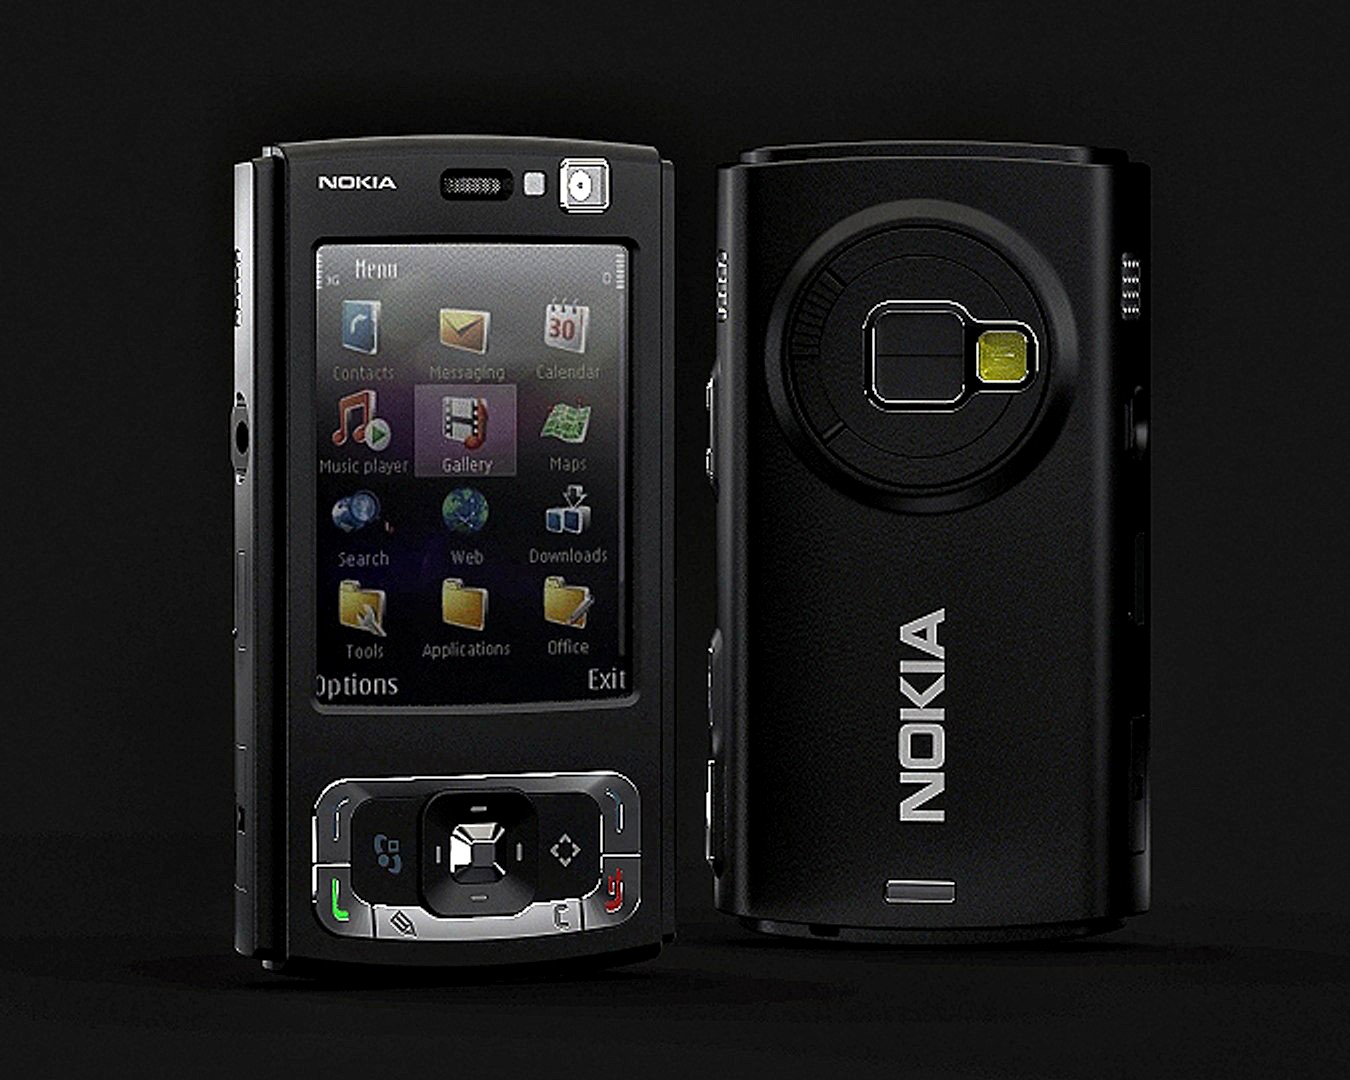 Nokia N95 not finished